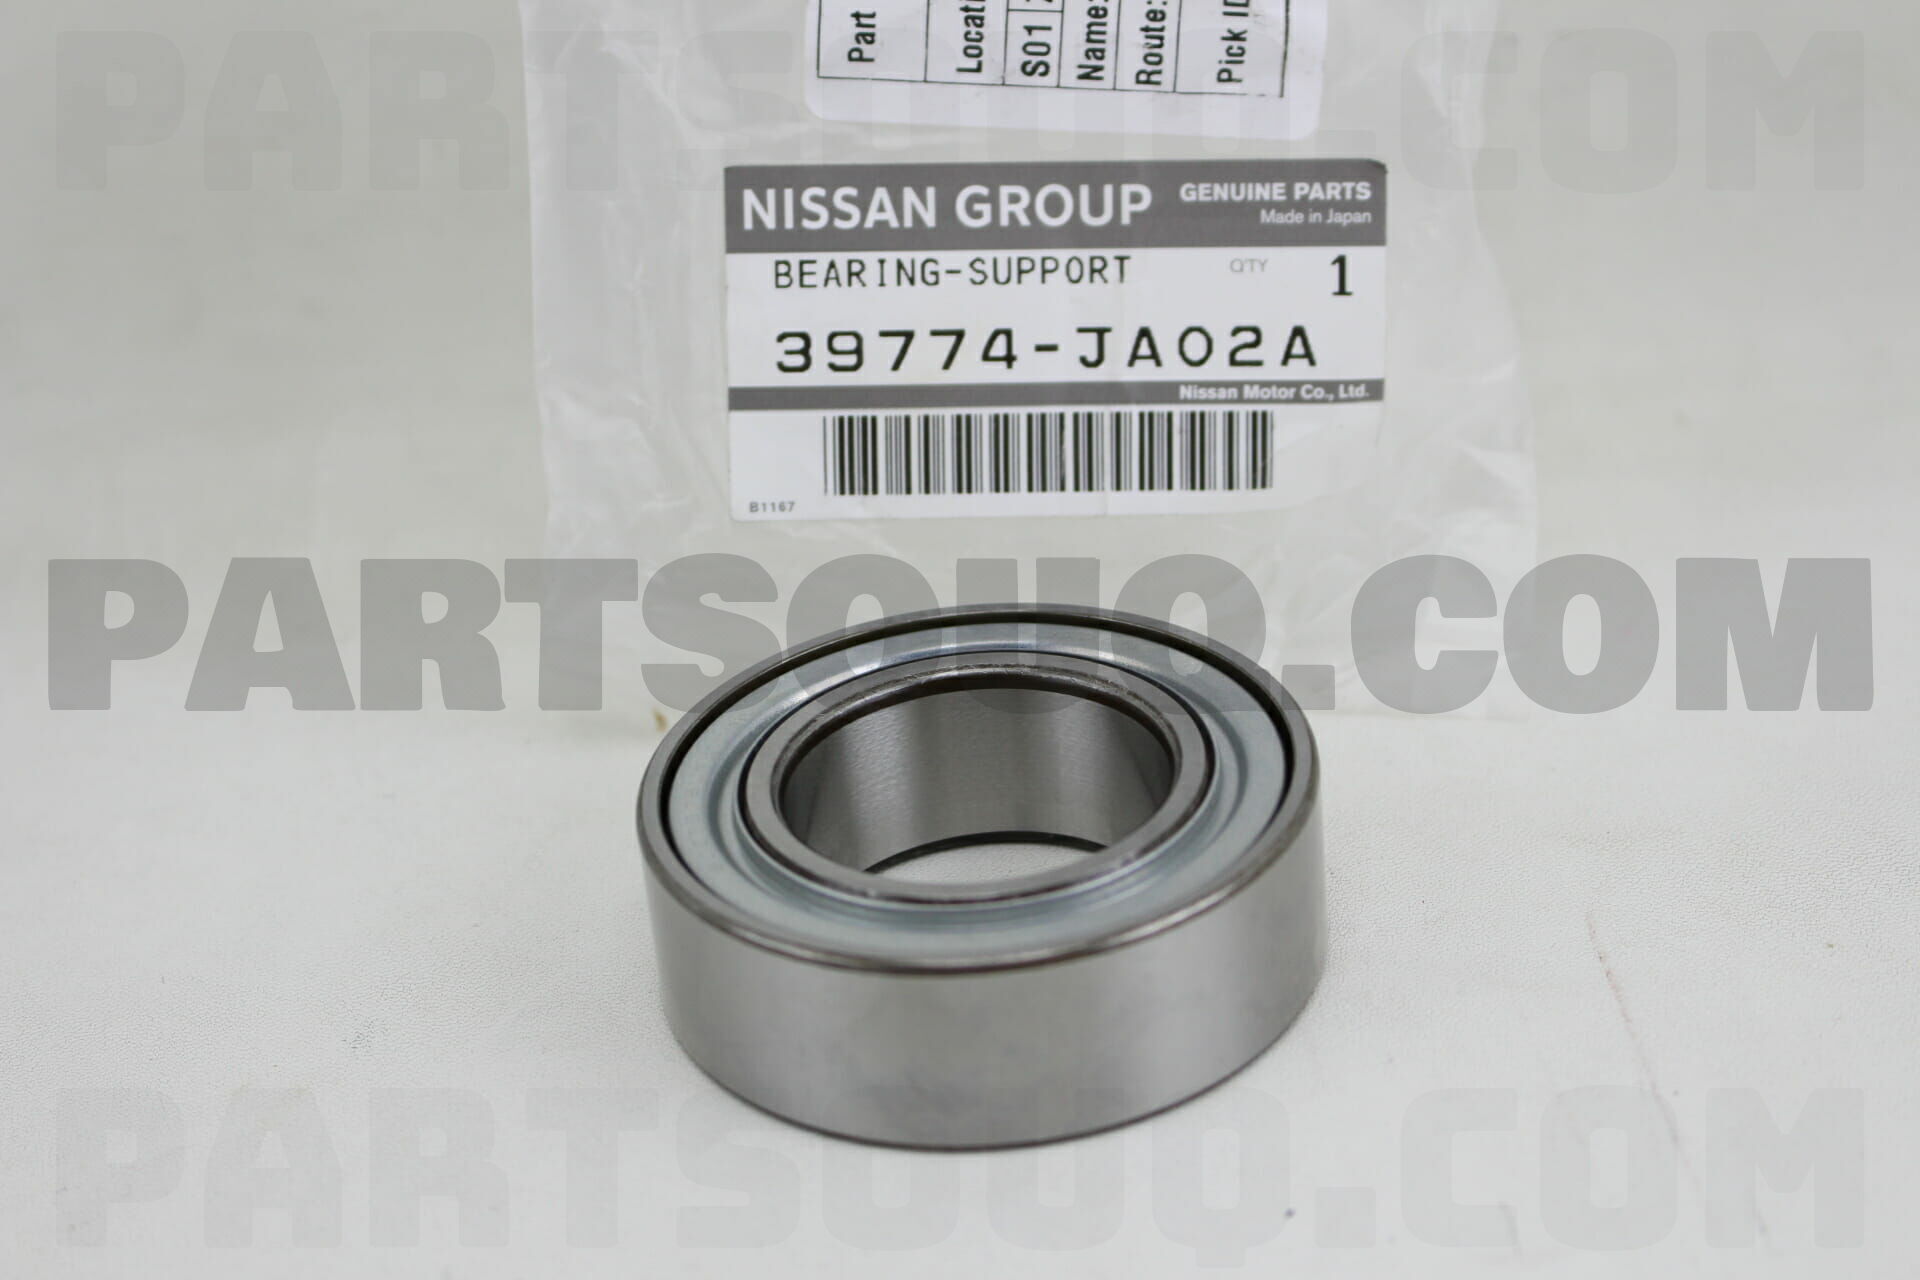 BEARING-SUPPORT 39774JA02A | Nissan Parts | PartSouq